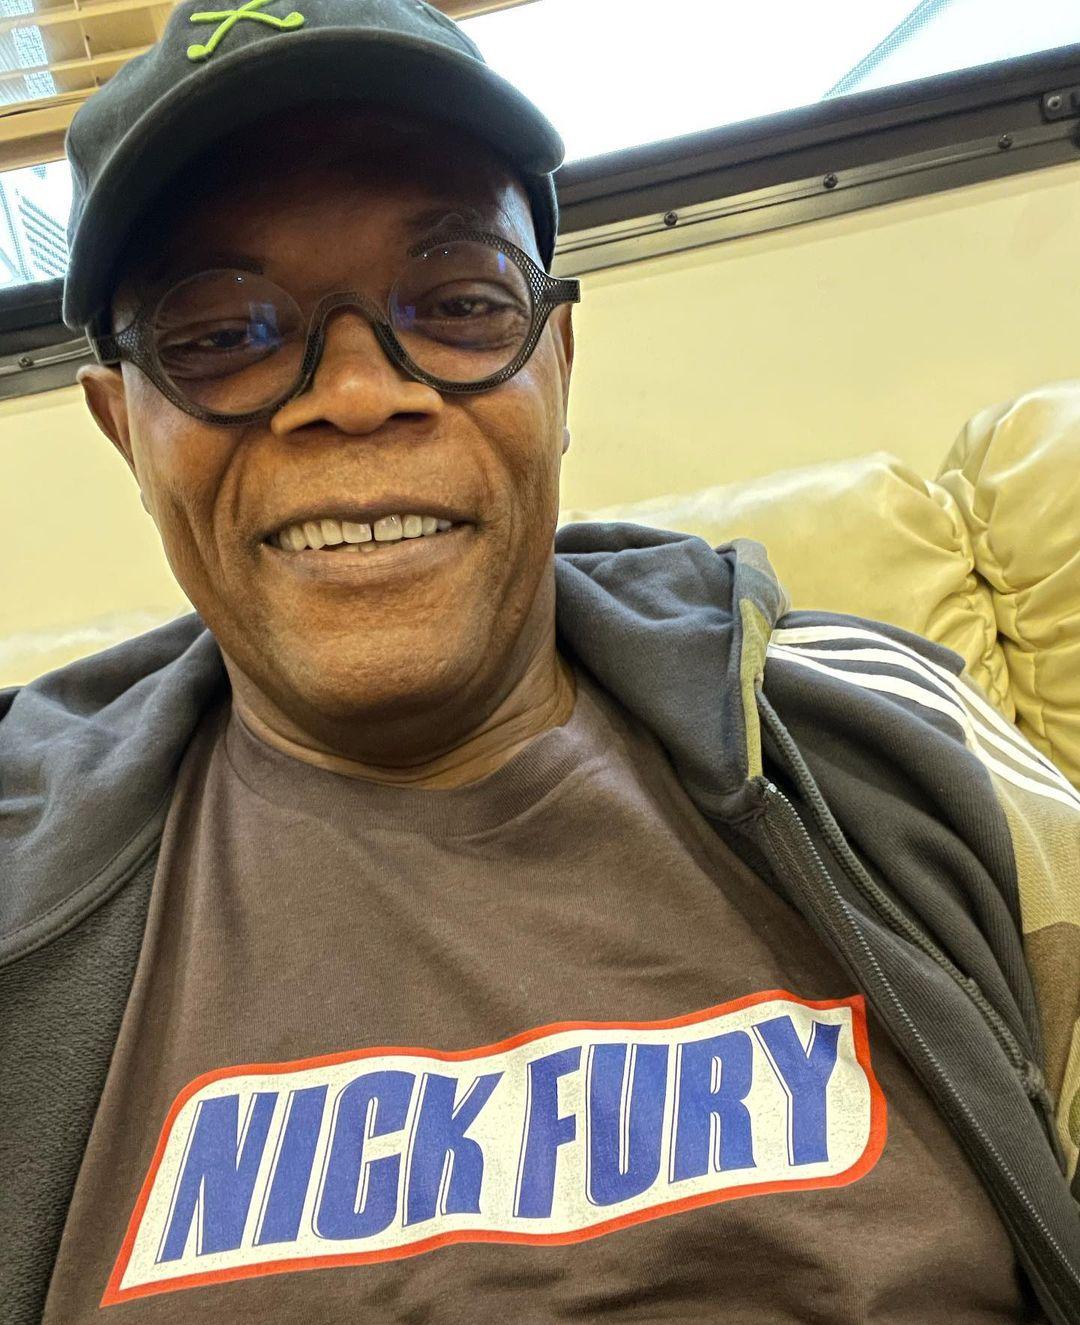 A selfie photo showing Samuel L Jackson in a 'Nick Furry' shirt.